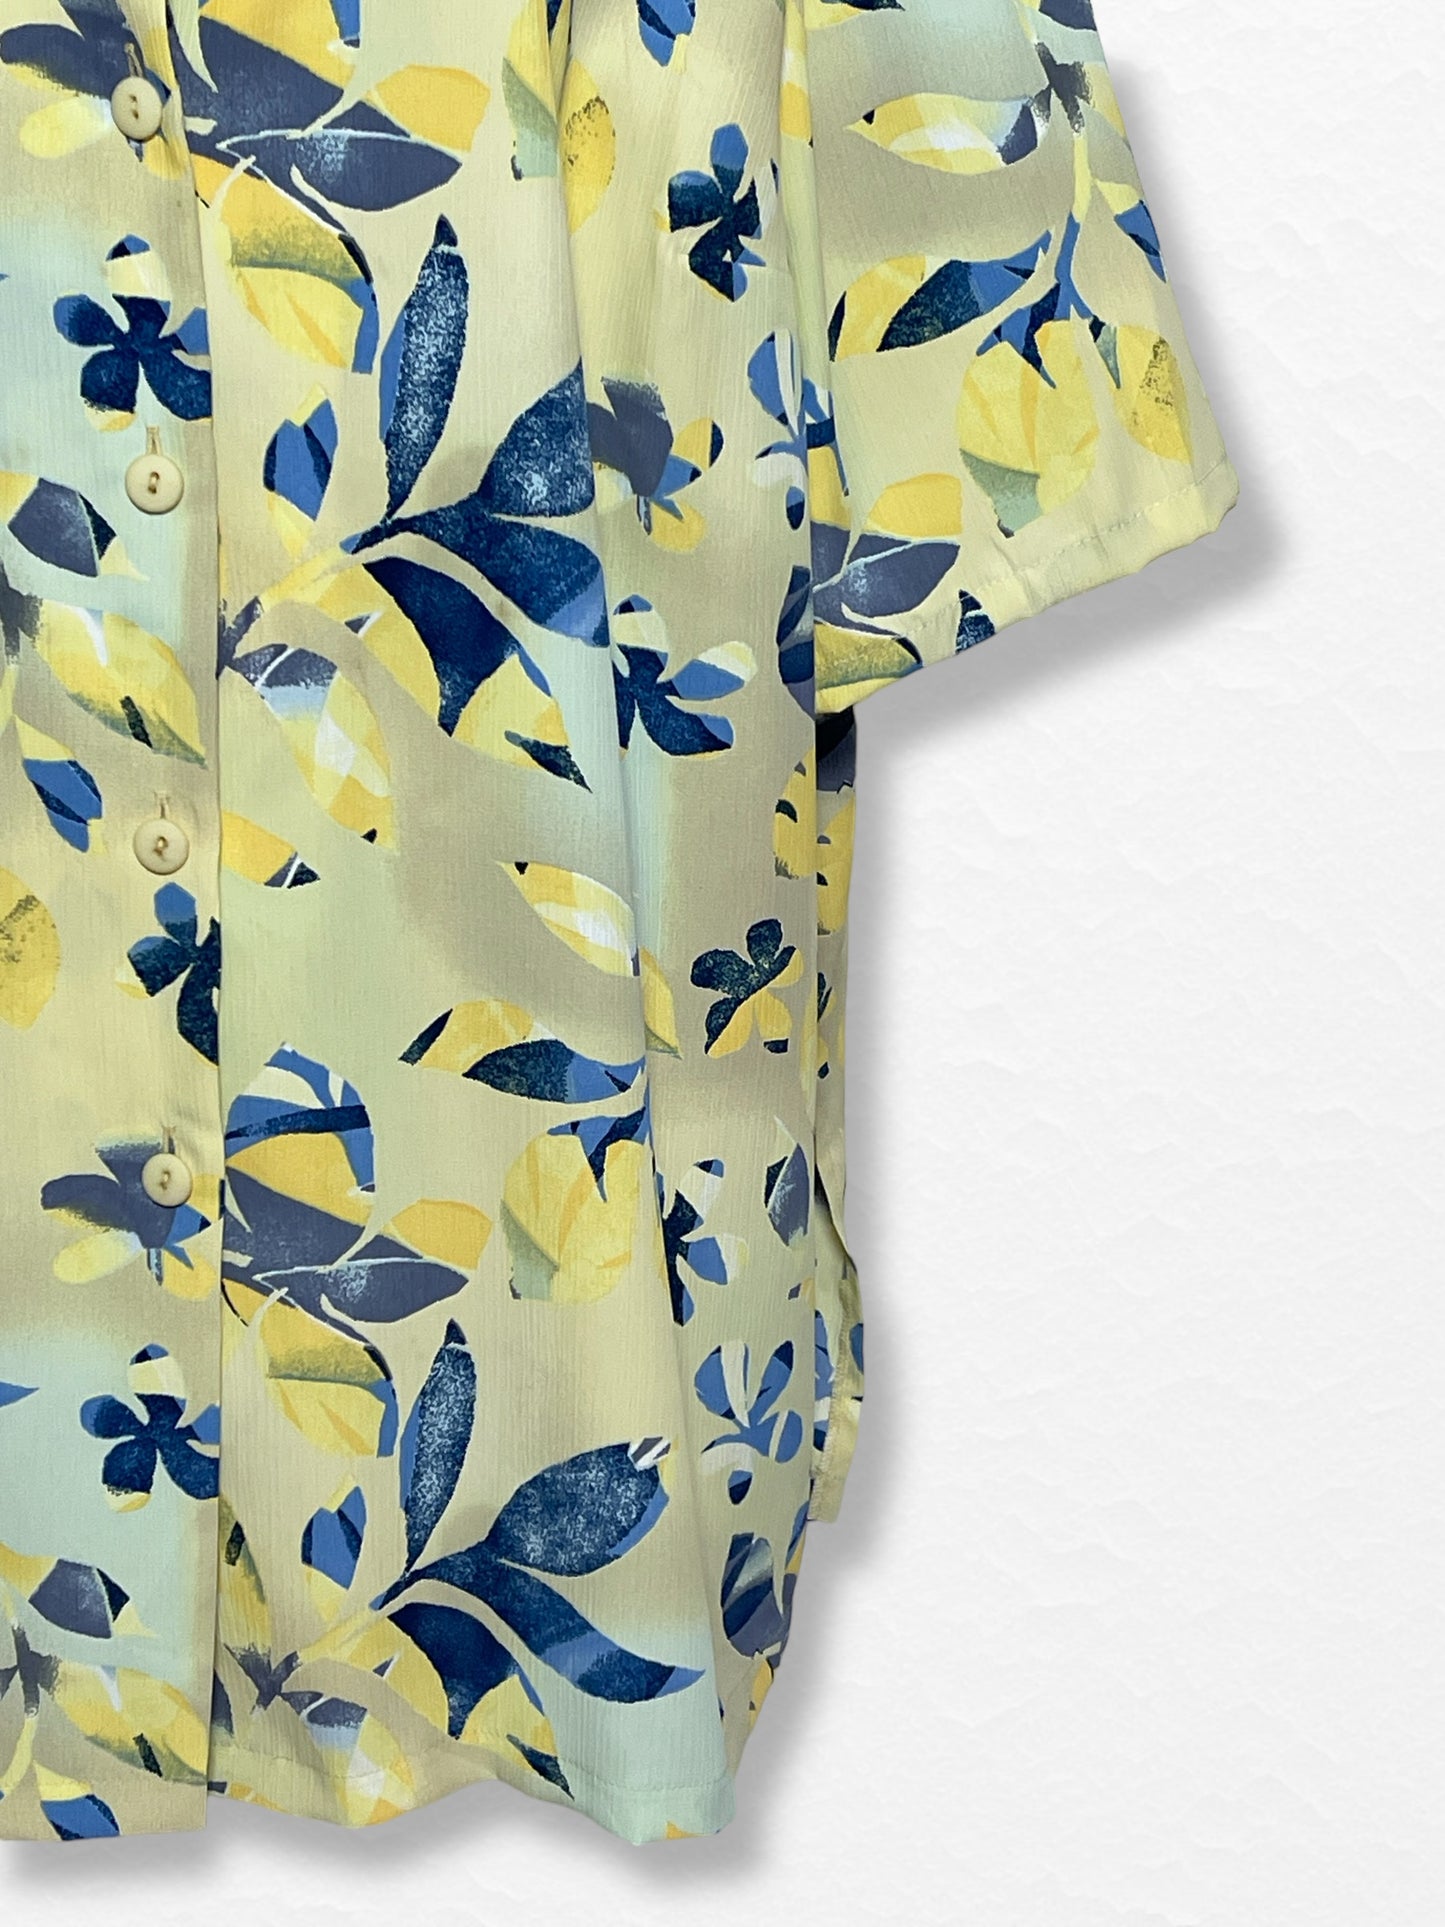 Women's Hawaii Shirt 4048